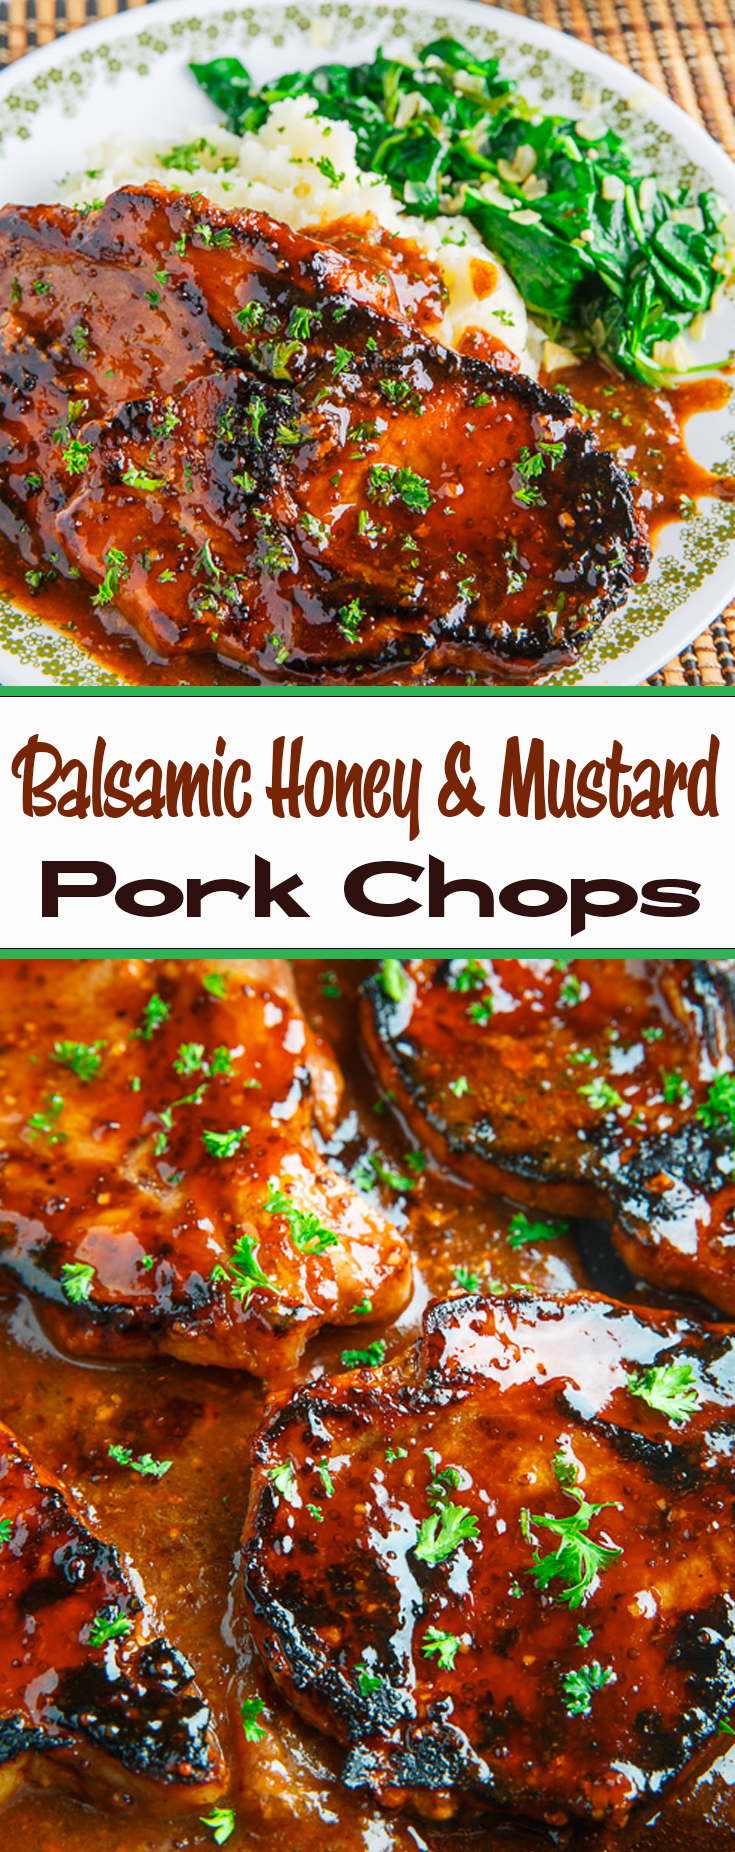 Balsamic Honey and Mustard Pork Chops